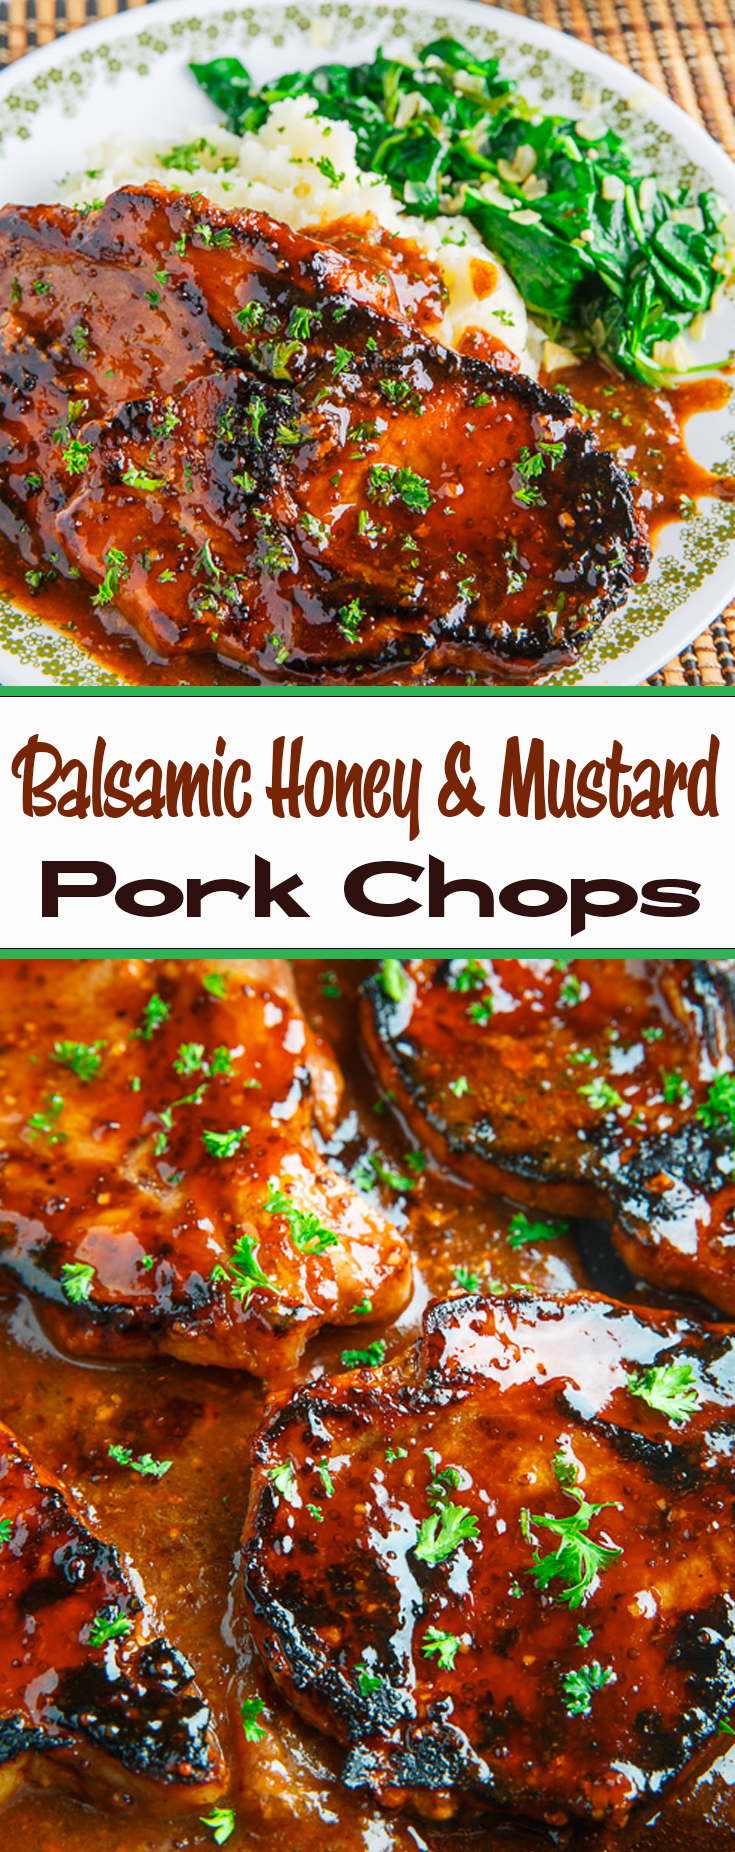 Balsamic Honey and Mustard Pork Chops